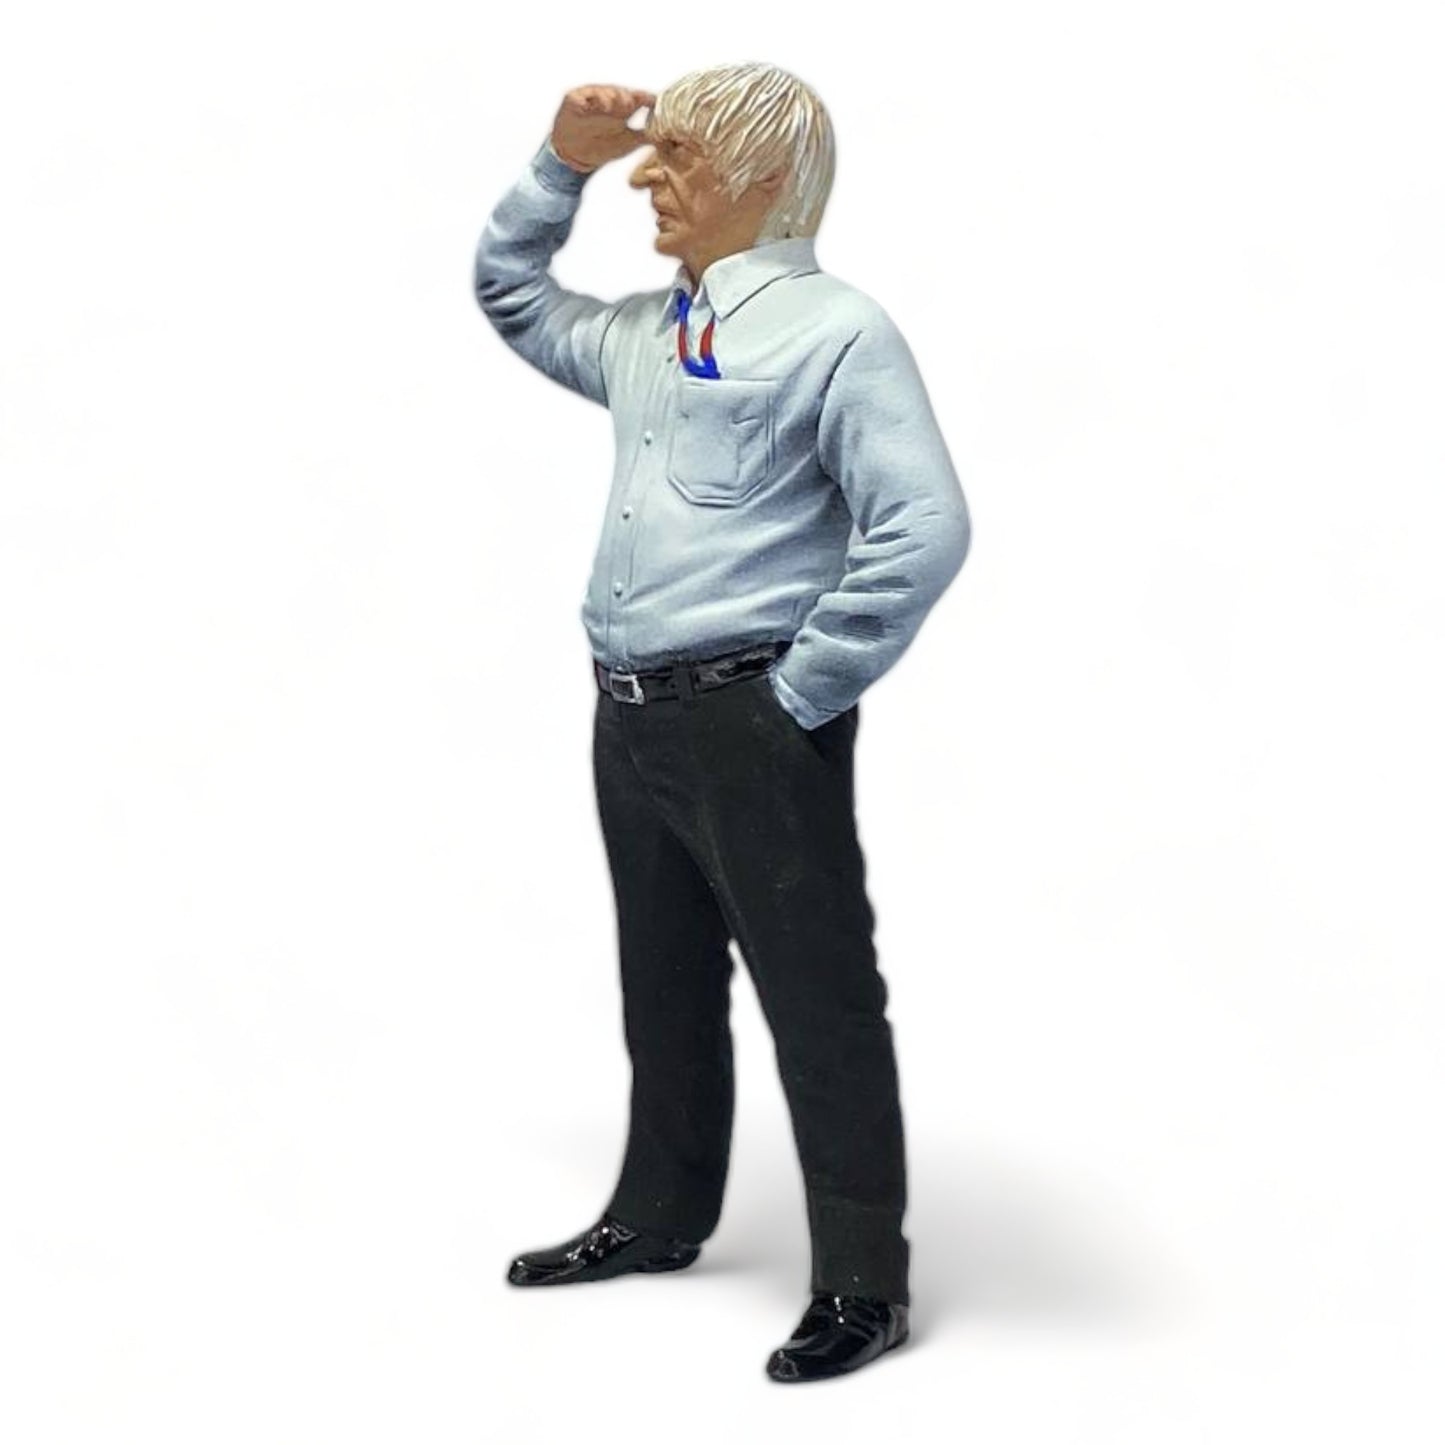 Bernie Ecclestone F1 Owner Figure- Action Figure by SF|Sold in Dturman.com Dubai UAE.